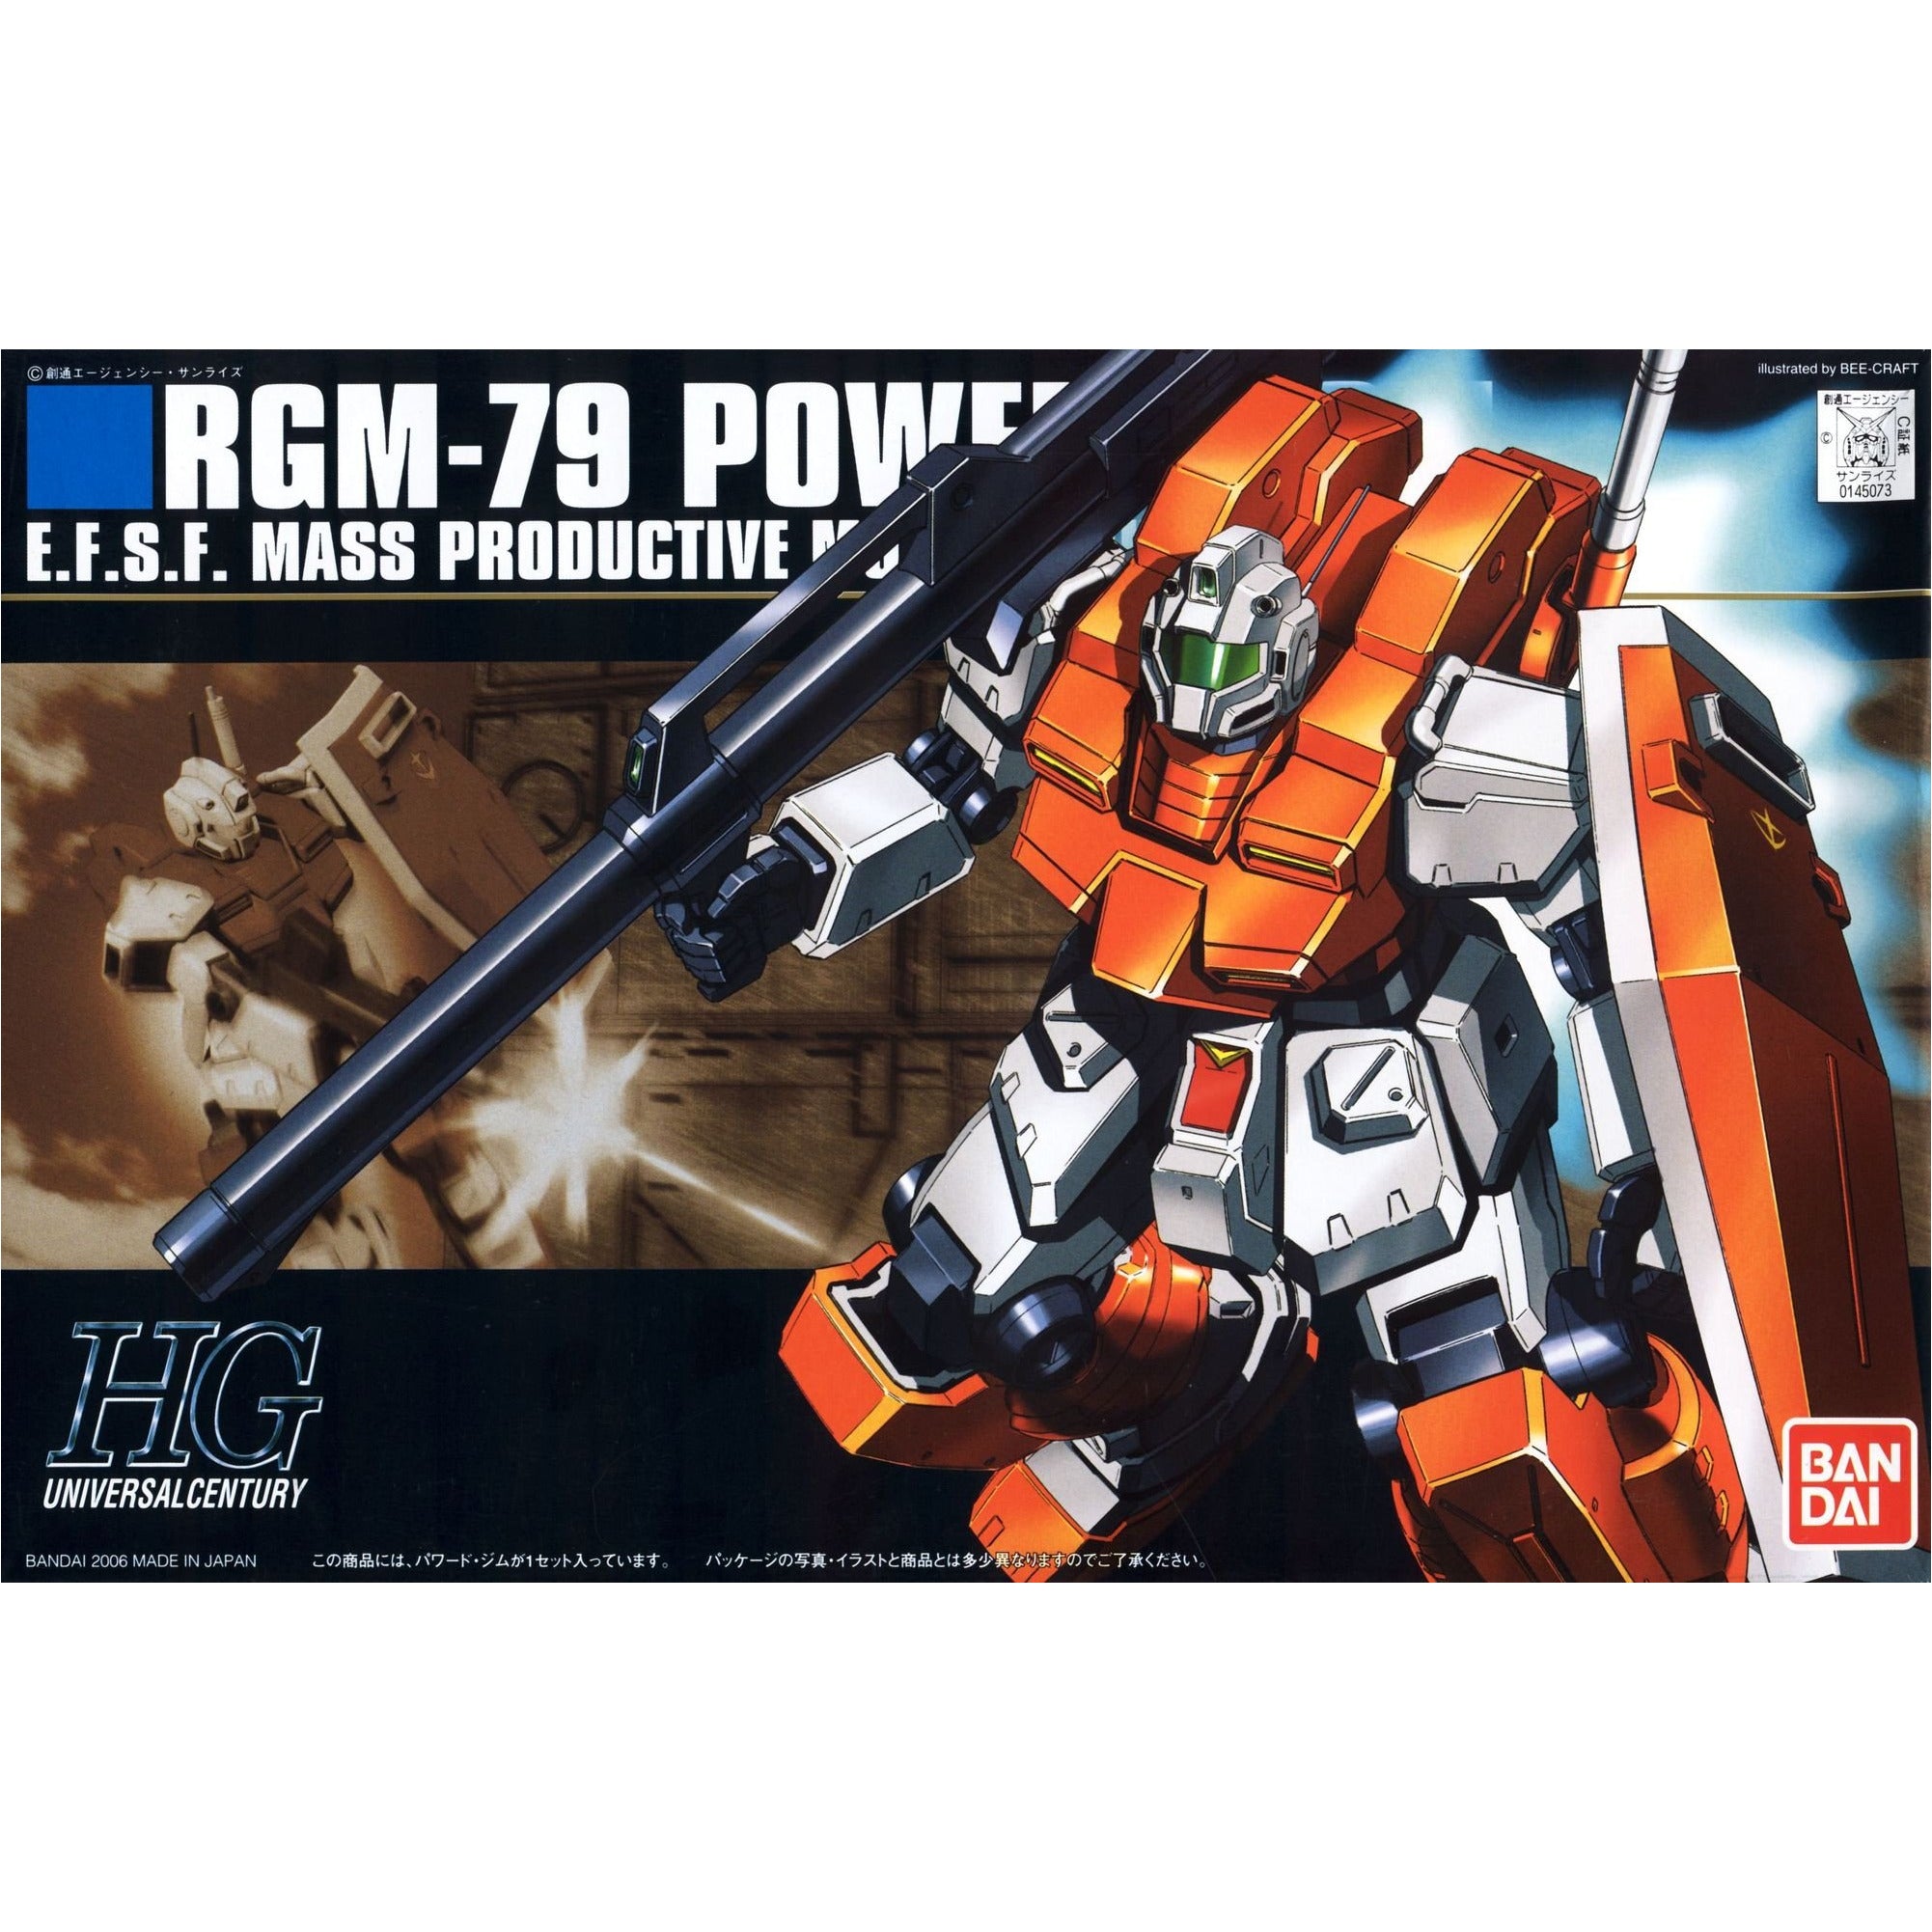 HGUC 1/144 #067 RGM-79 Powered GM #5060969 by Bandai